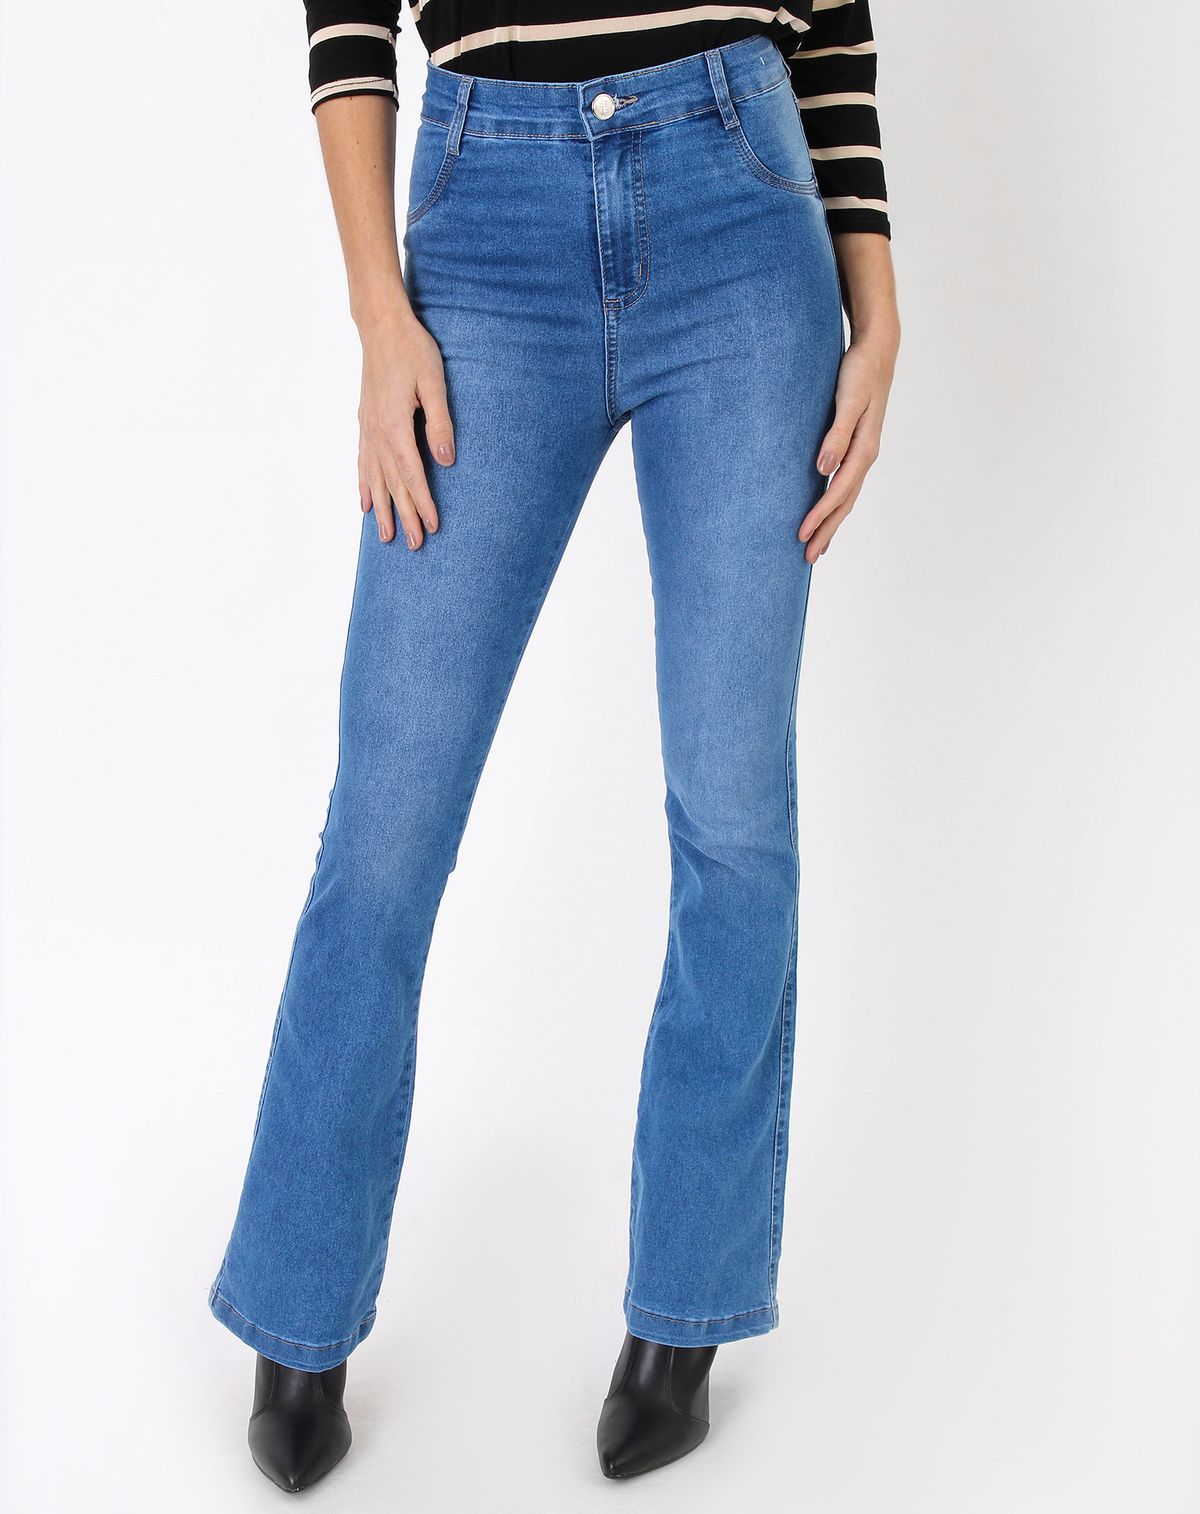 661415019-calca-jeans-flare-feminina-basica---jeans-claro-jeans-claro-36-125